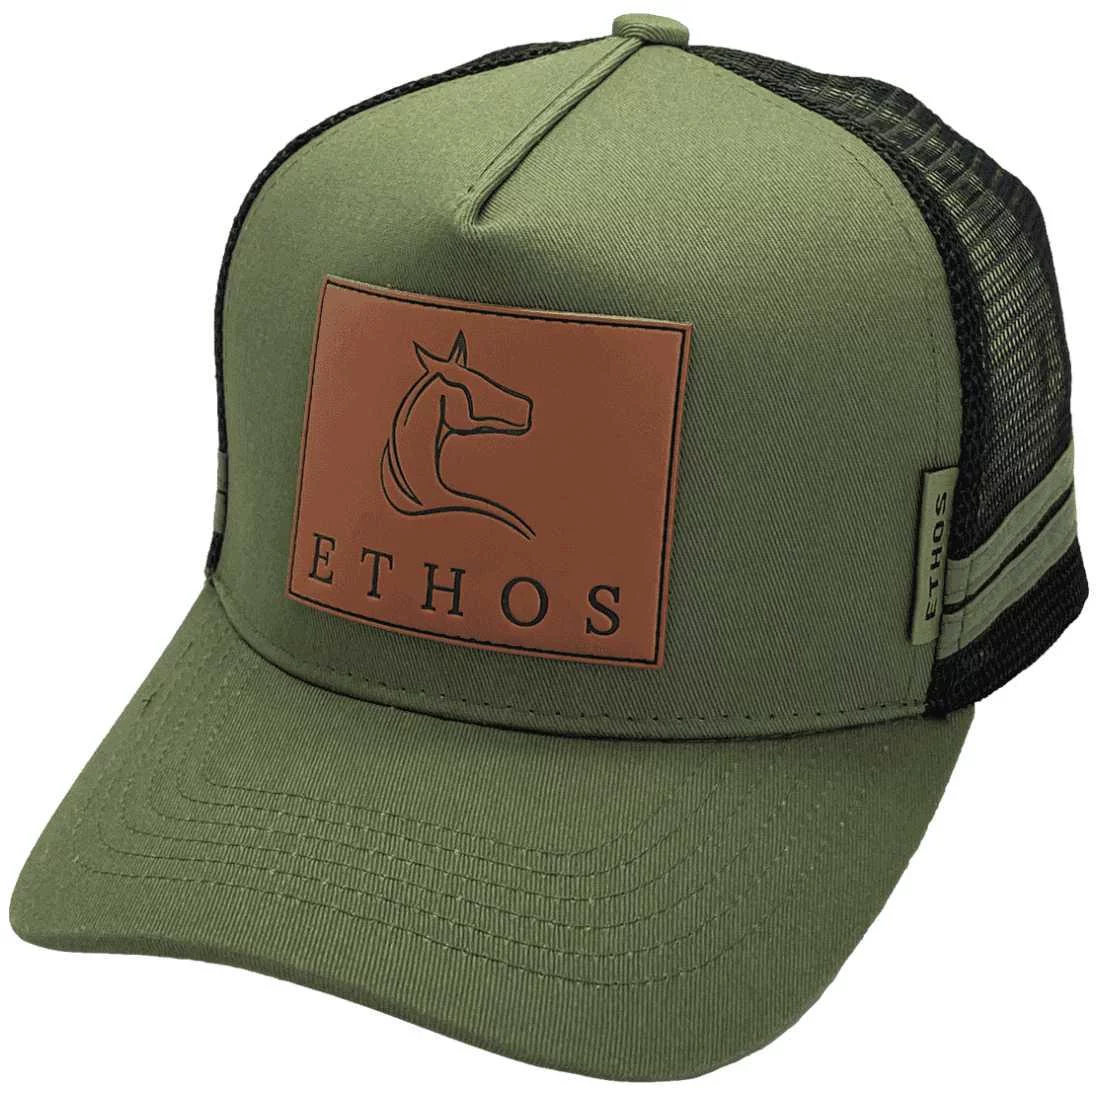 Ethos Walcha - HP -Original Basic Aussie Trucker Hat with double side bands Cotton